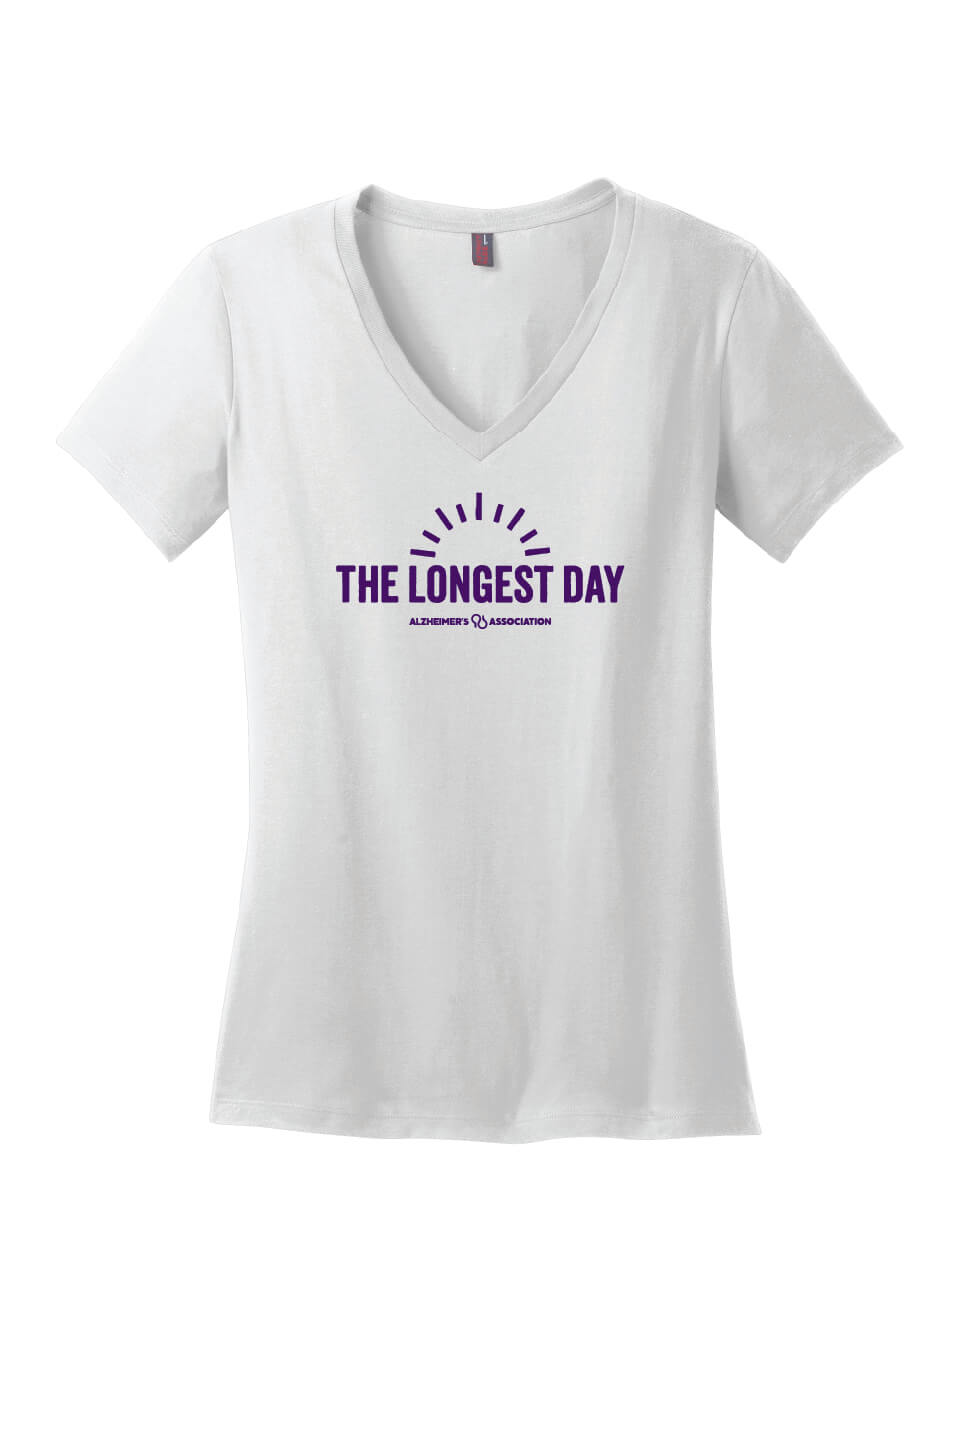 The Longest Day Ladies V-Neck Short Sleeve T-Shirt white horizontal design